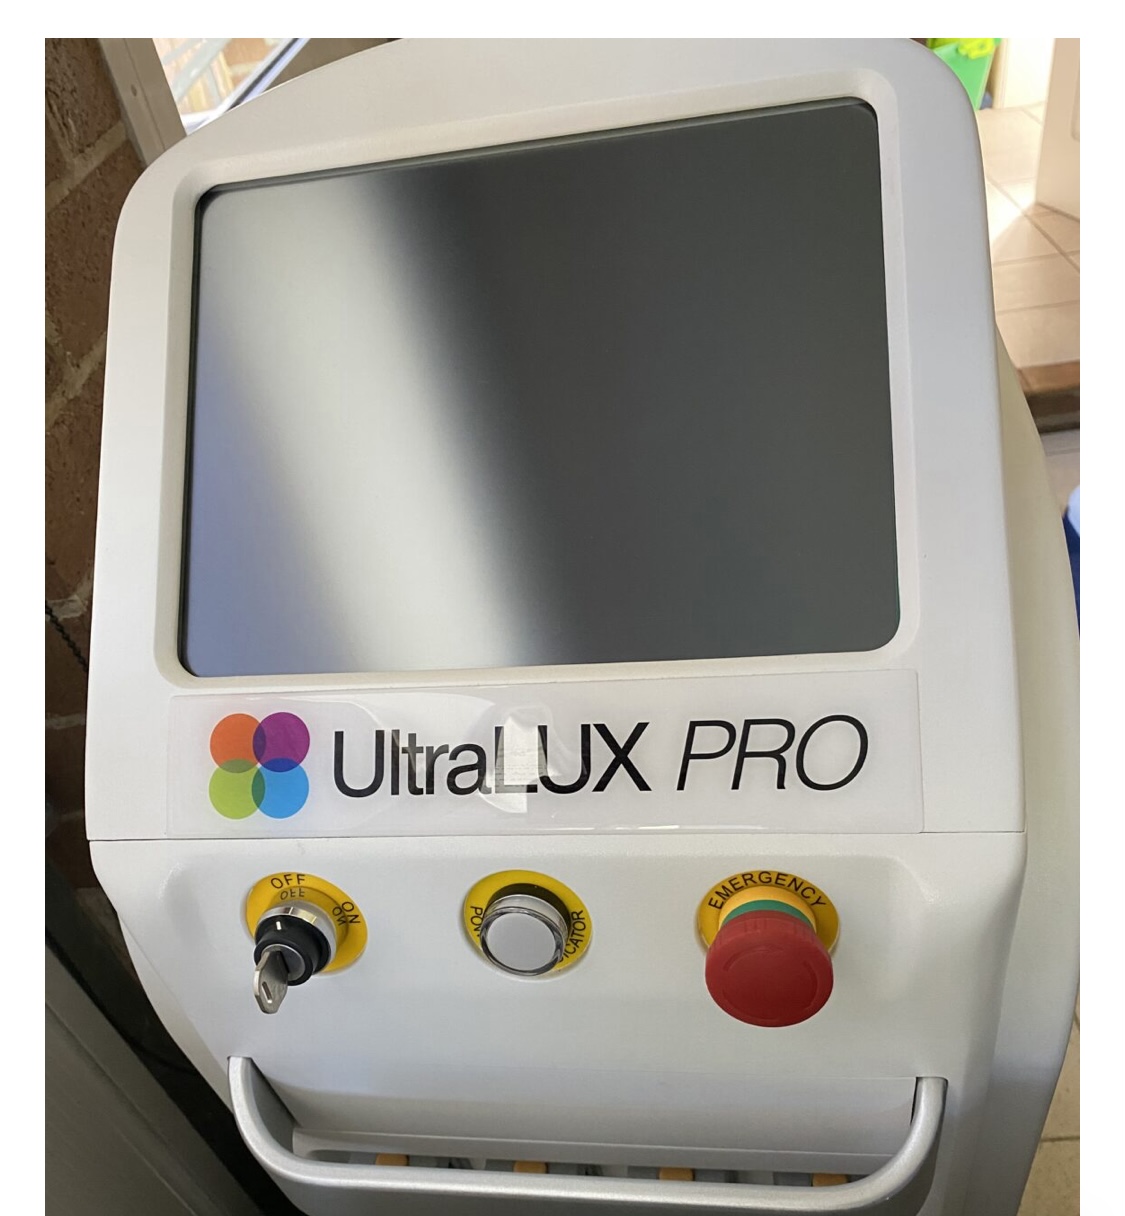 UltraLux Water Machine